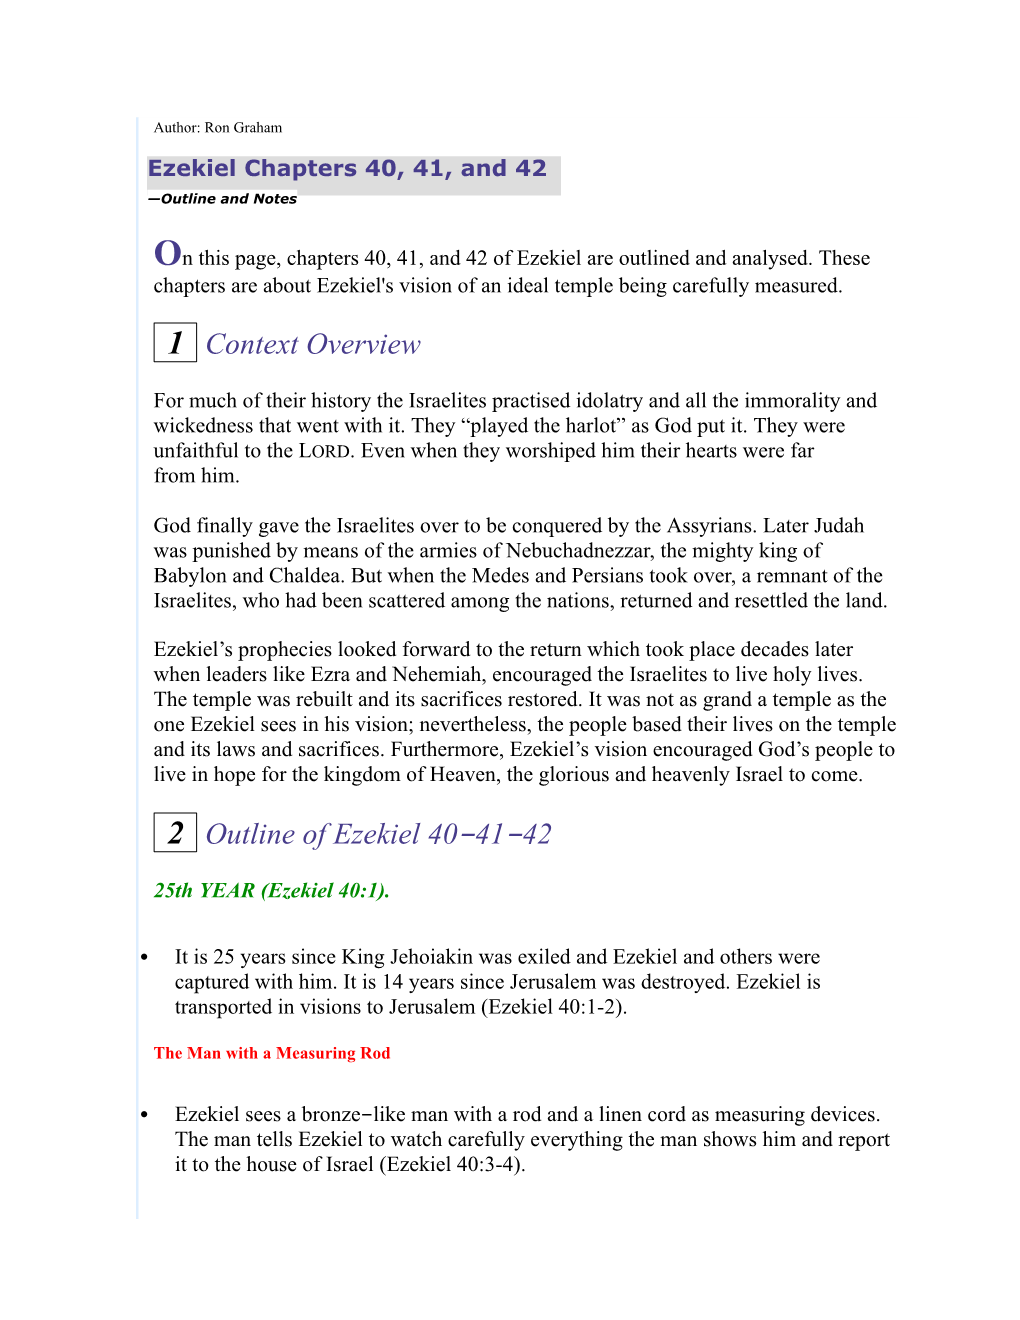 1 Context Overview 2 Outline of Ezekiel 40-41-42